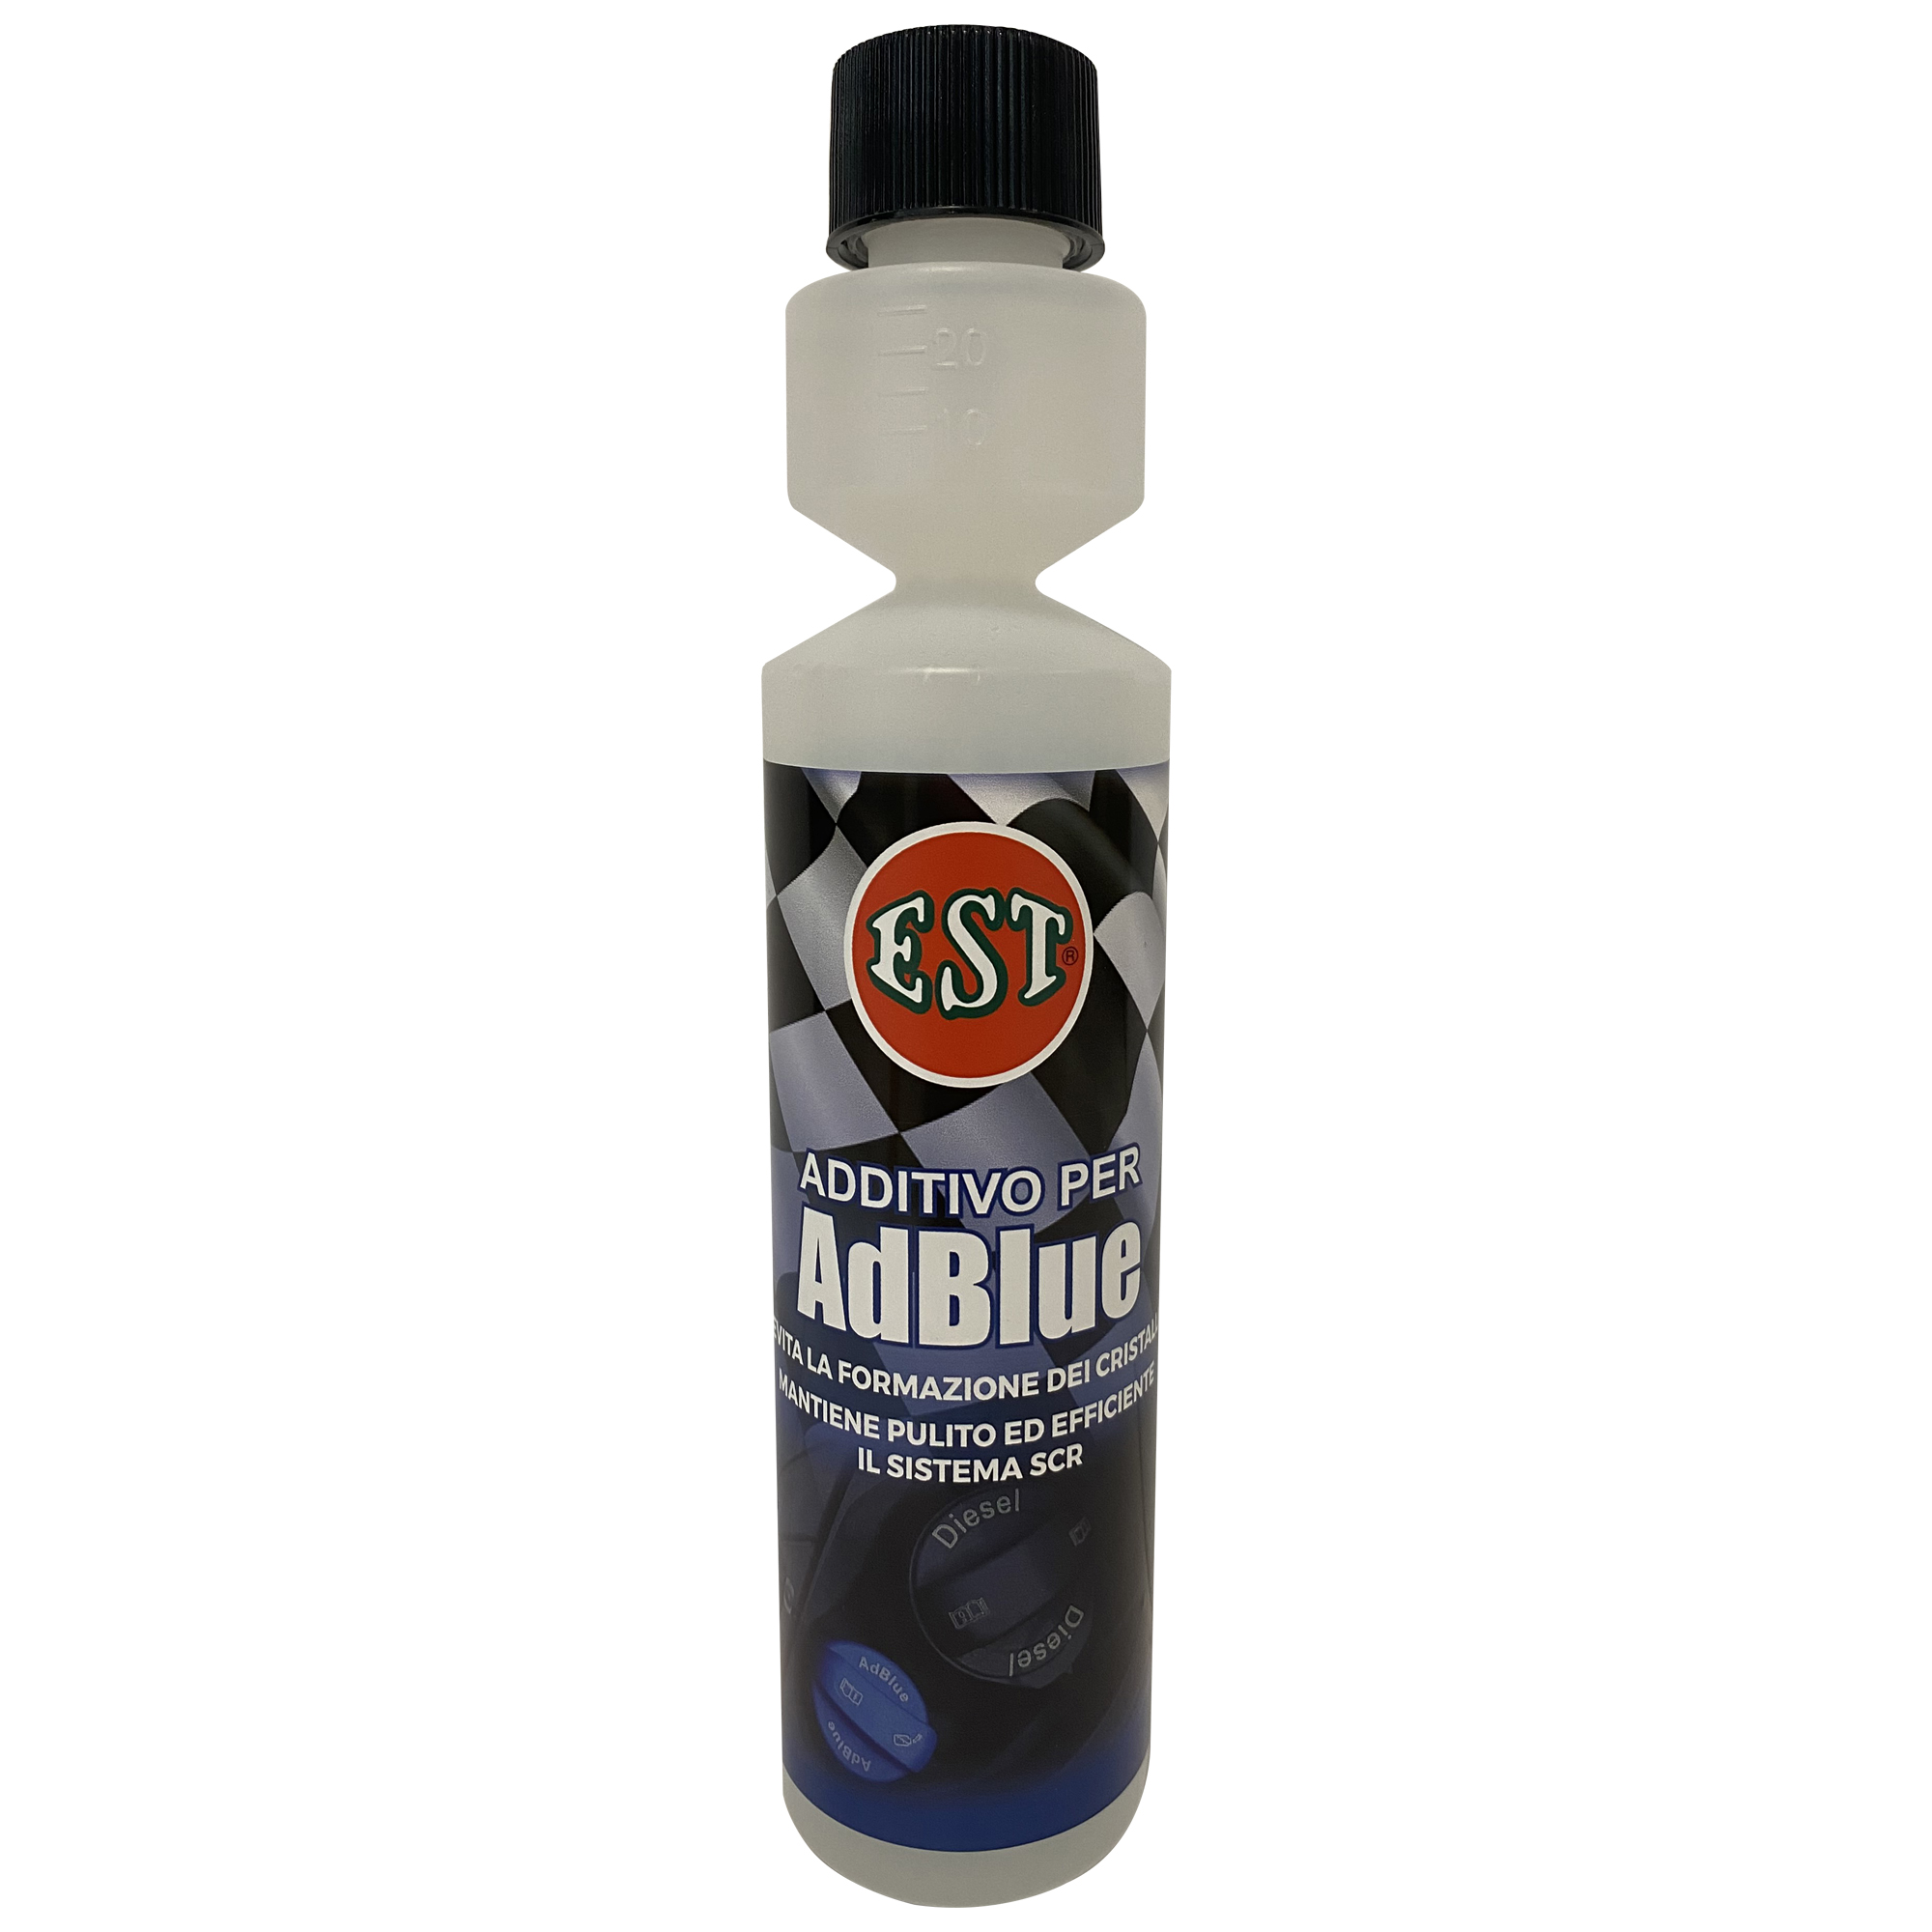 EST - Additivo per AdBlue 250 ml – DAC Srl